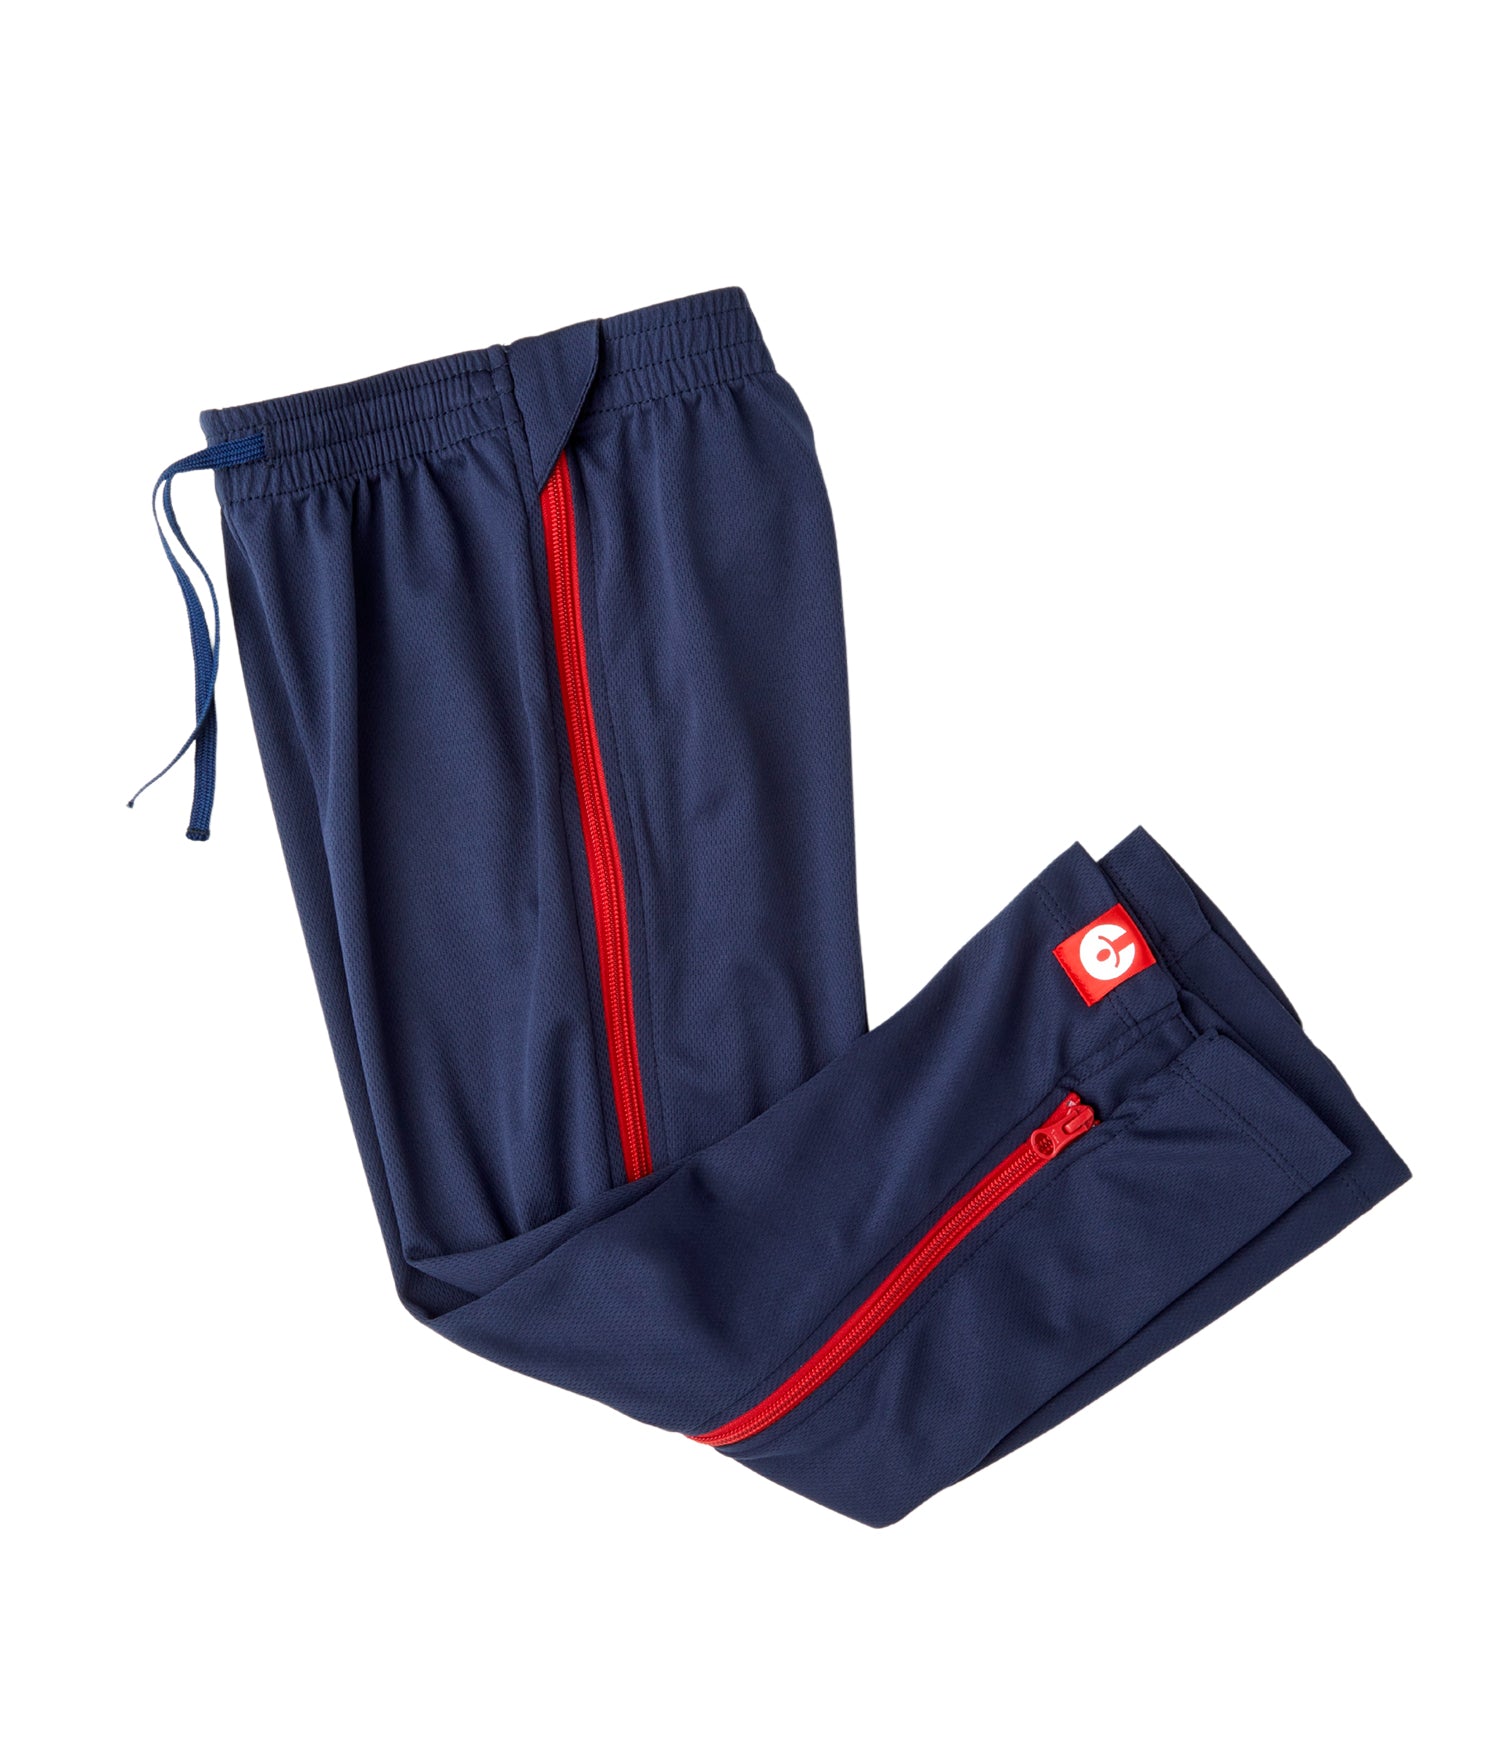 befree - zipOns  adaptive pants, adaptive clothing, zippered pants, post surgery pants, & pants for casts. 